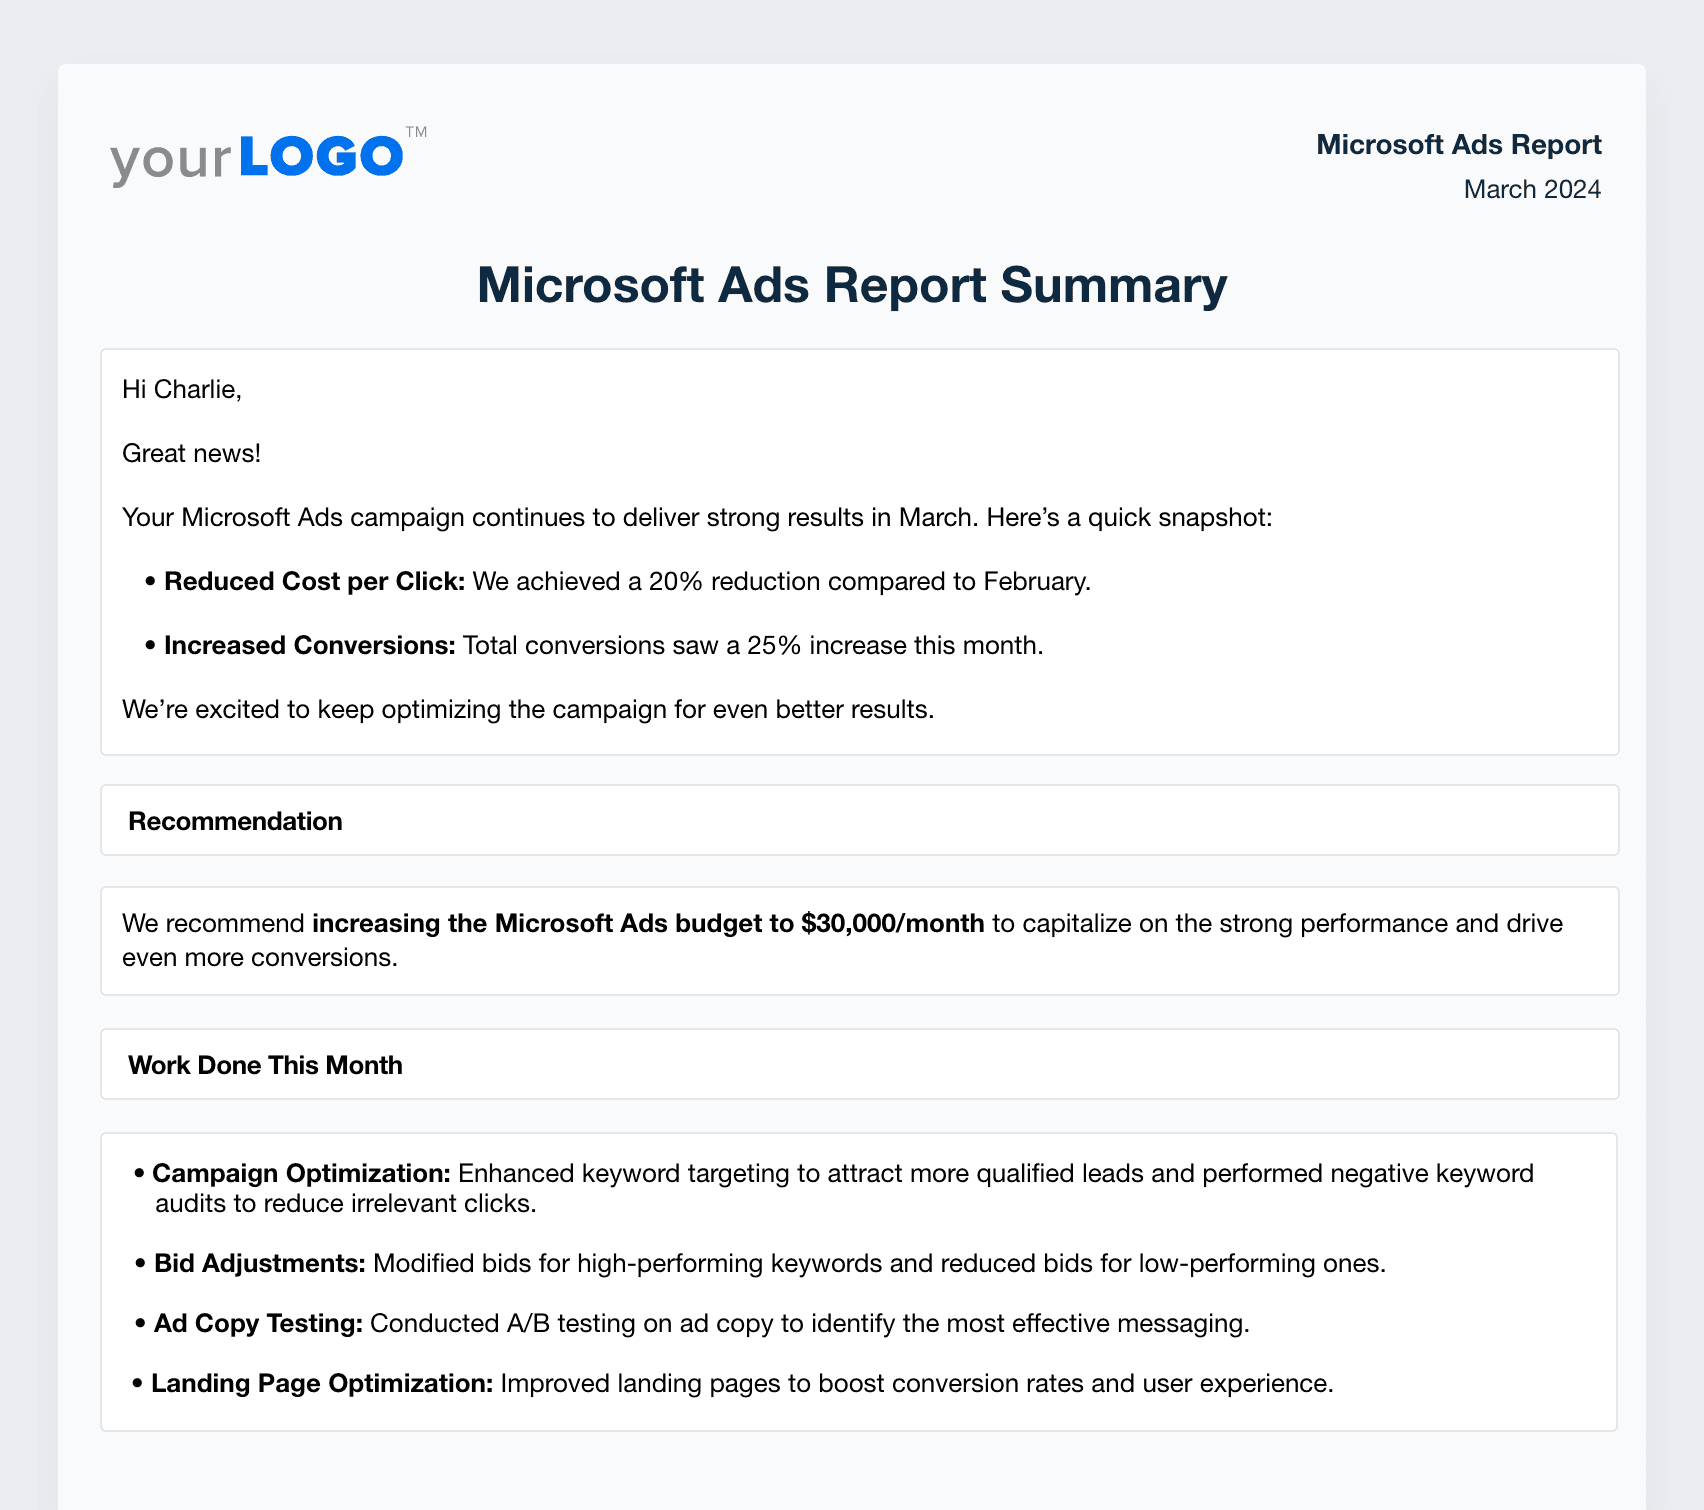 Microsoft ads report summary